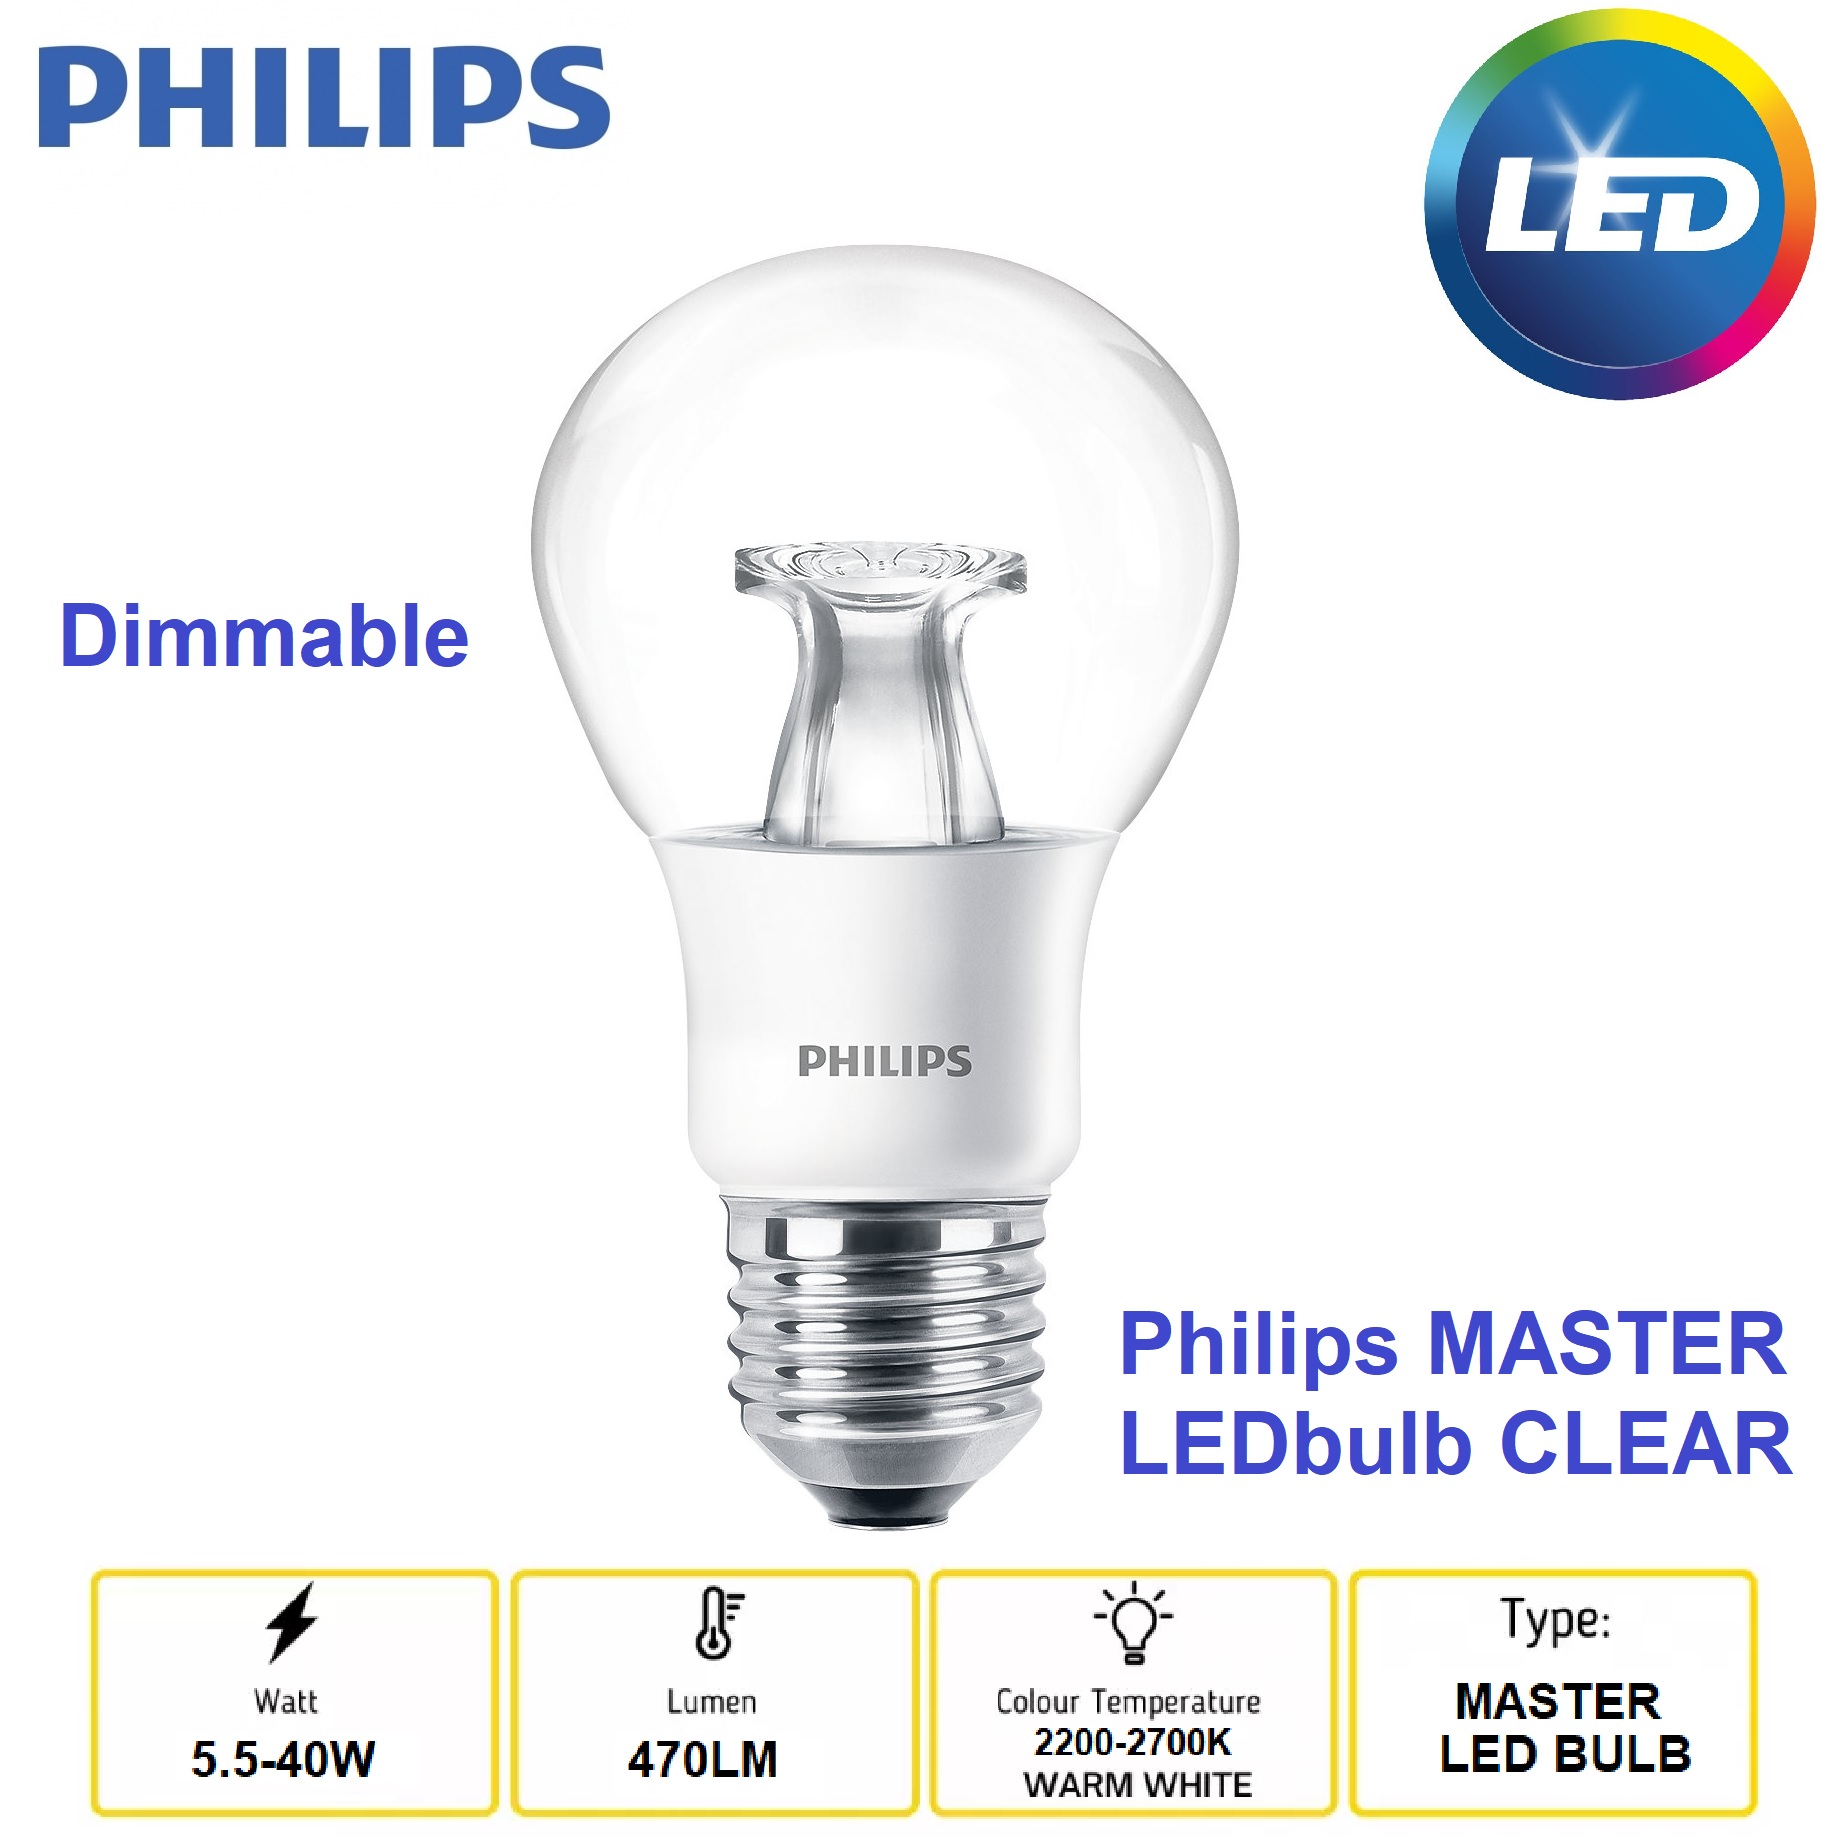 marts udvande hænge Philips Master LED bulb DT 5.5W-40W E27 A60 CL LEDbulb Warm White Dimmable  Clear | Lazada PH